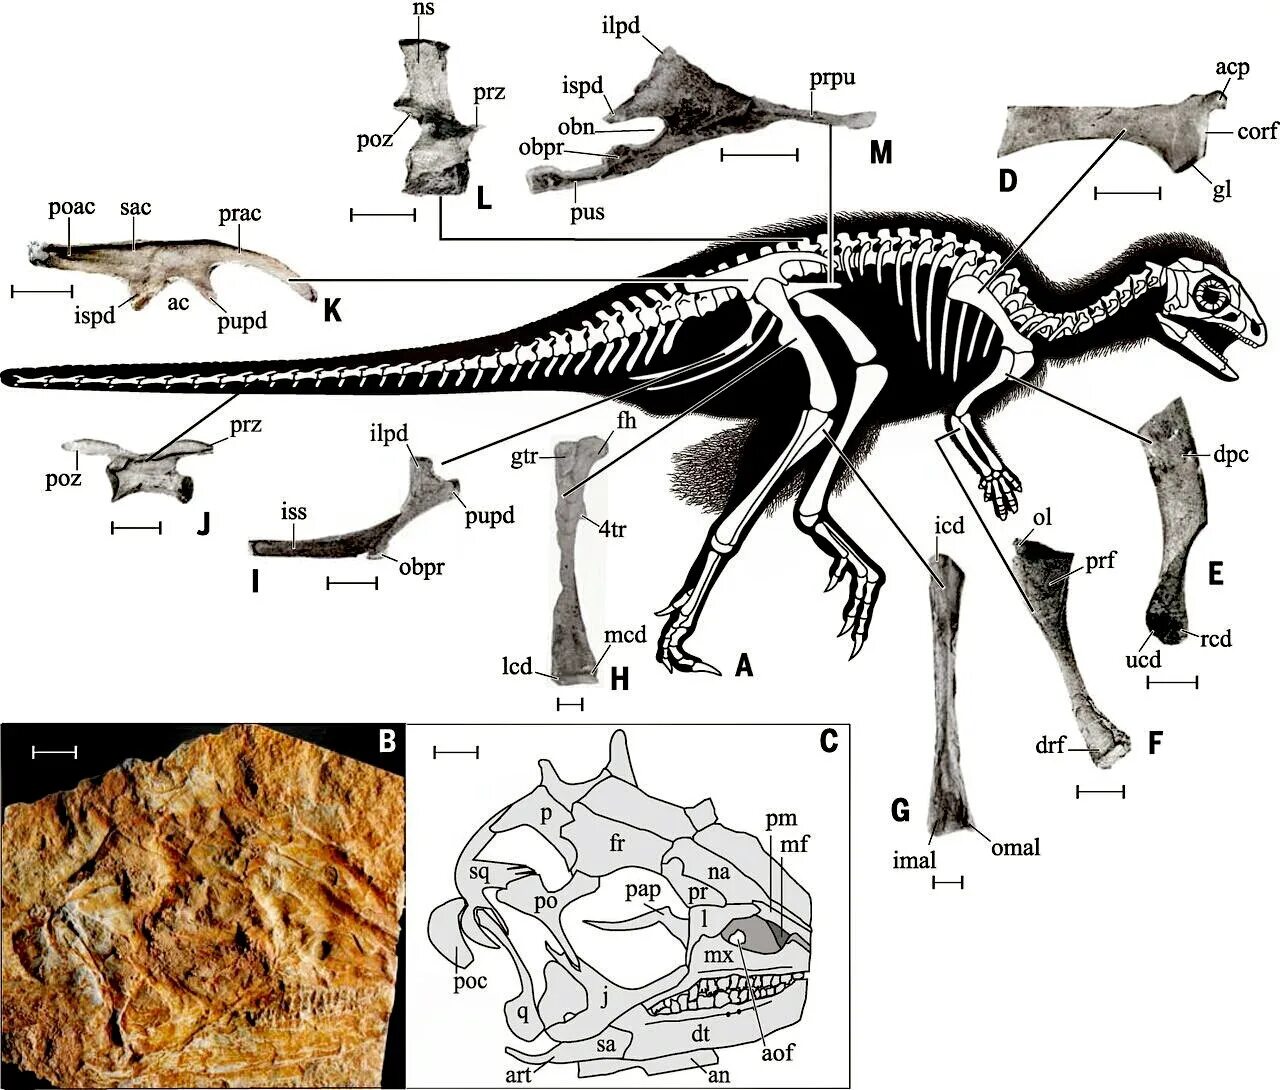 Kulindadromeus zabaikalicus. Кулиндадромеус скелет. Кулиндадромеус динозавр. Кулиндадромеус Забайкальский размер.